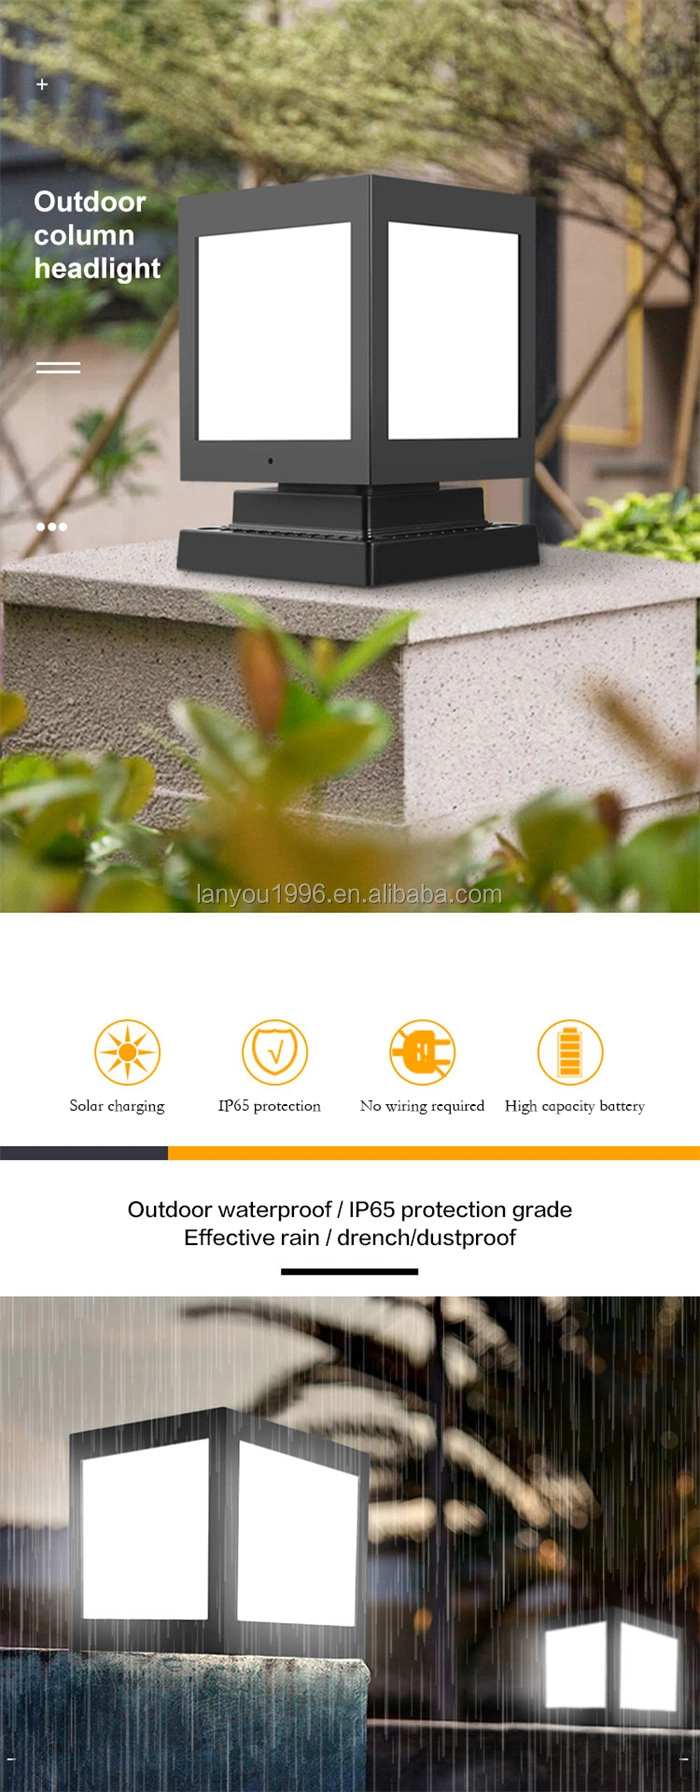 Premium Handy Brite Solar Outdoor Post Lights Bright LED Light Solar Pillar Light for Fence Deck Garden